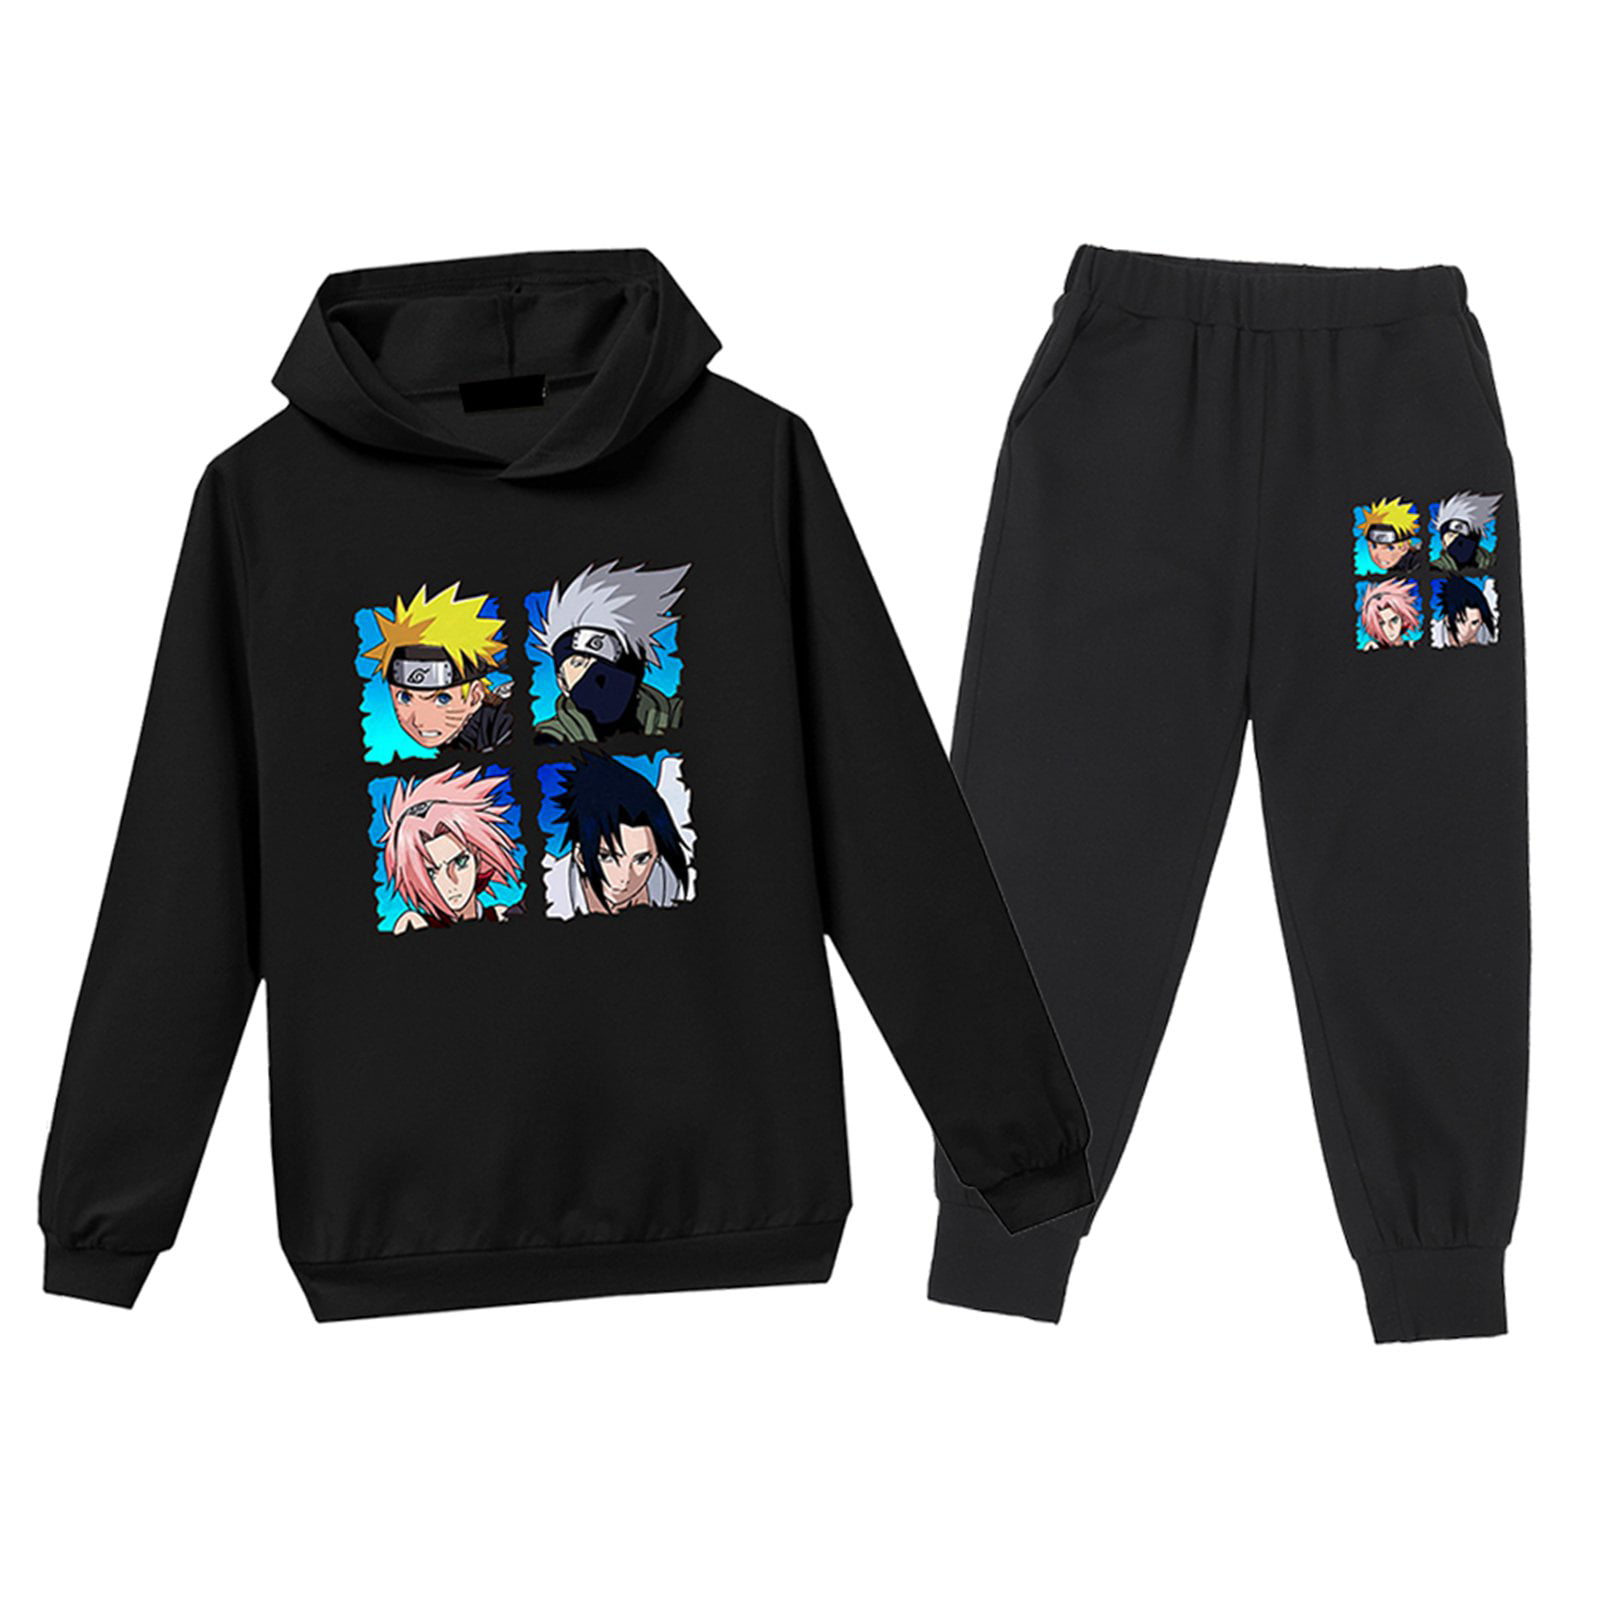 1-9T Kids Boys Girls Solid Tracksuit Outfit Hooded Zipper Sweatshirt Jacket+Sweatpants 2pcs Sport Clothes Set 